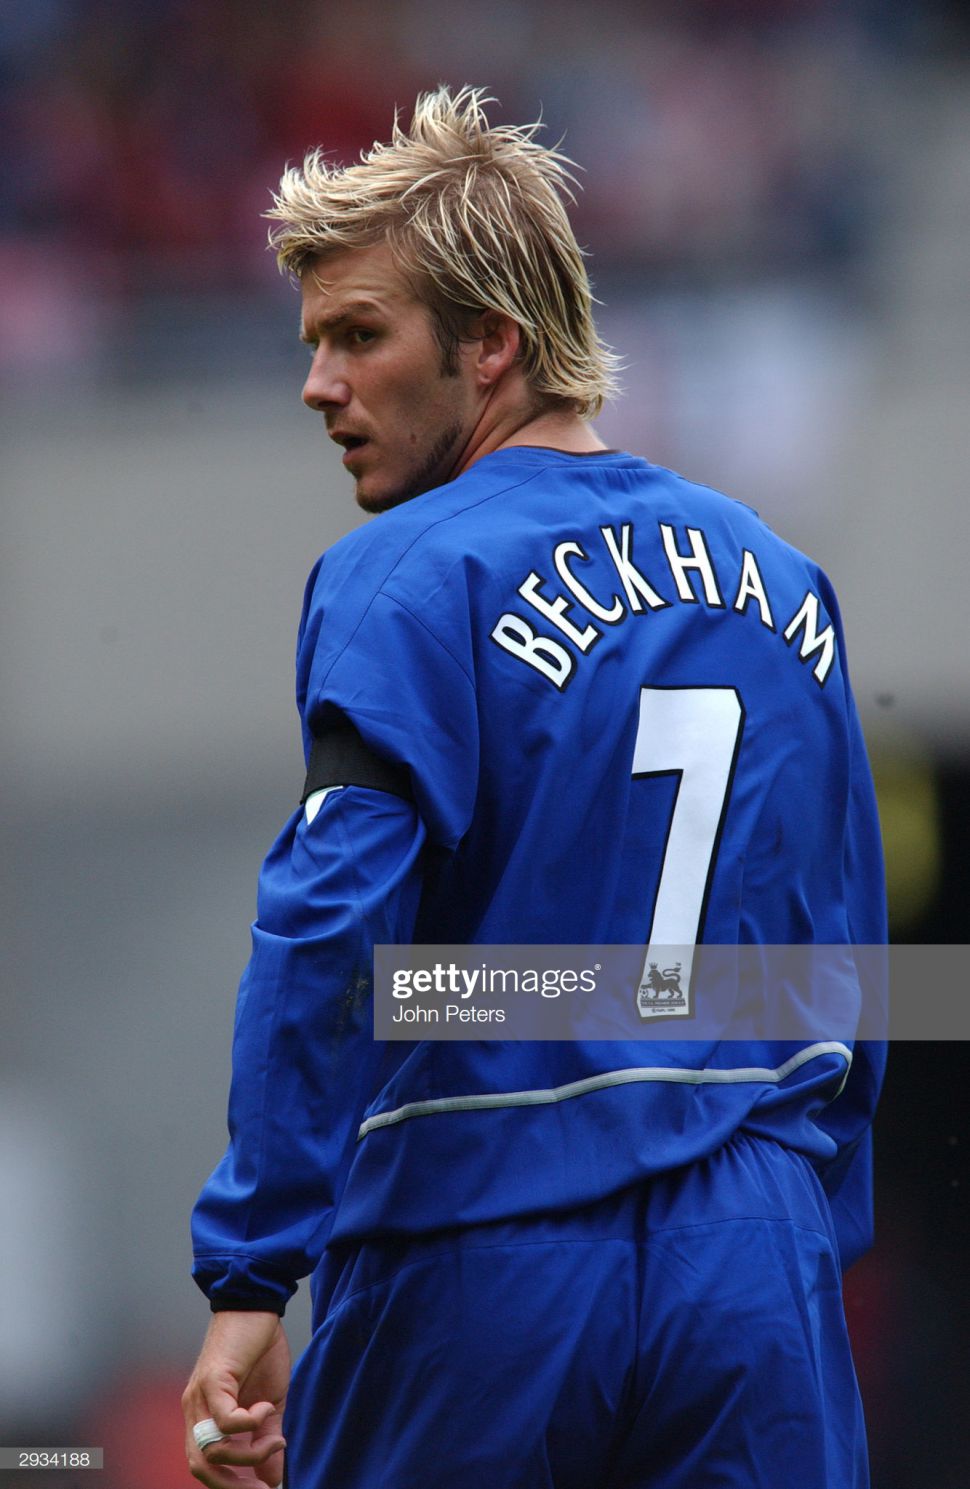 Áo đấu Manchester United 2002-2003 third shirt jersey blue long